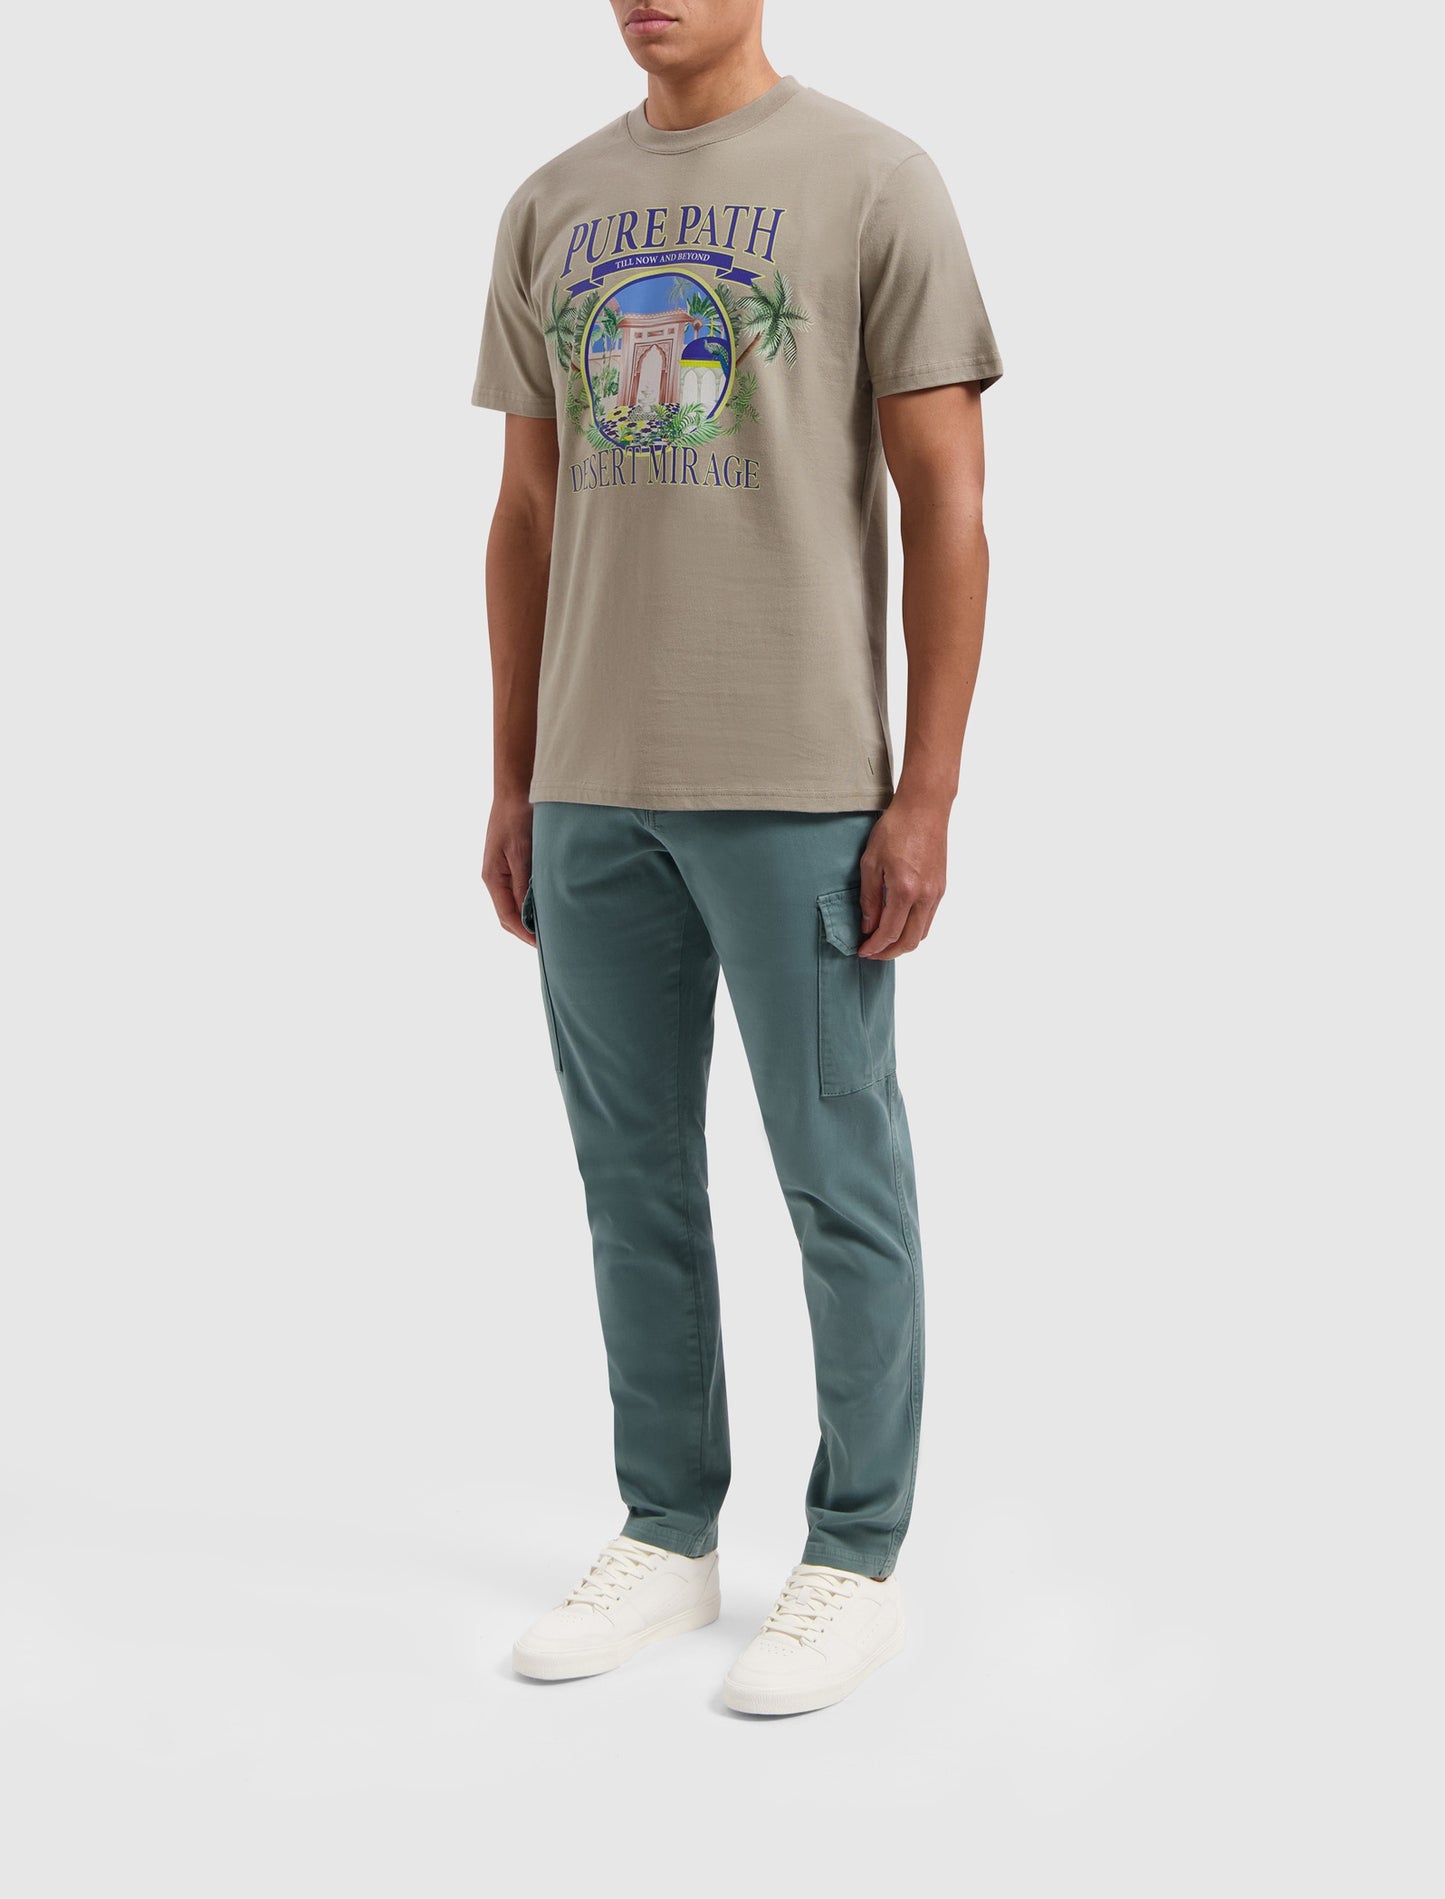 PURE PATH | Desert Mirage T-Shirt - Taupe